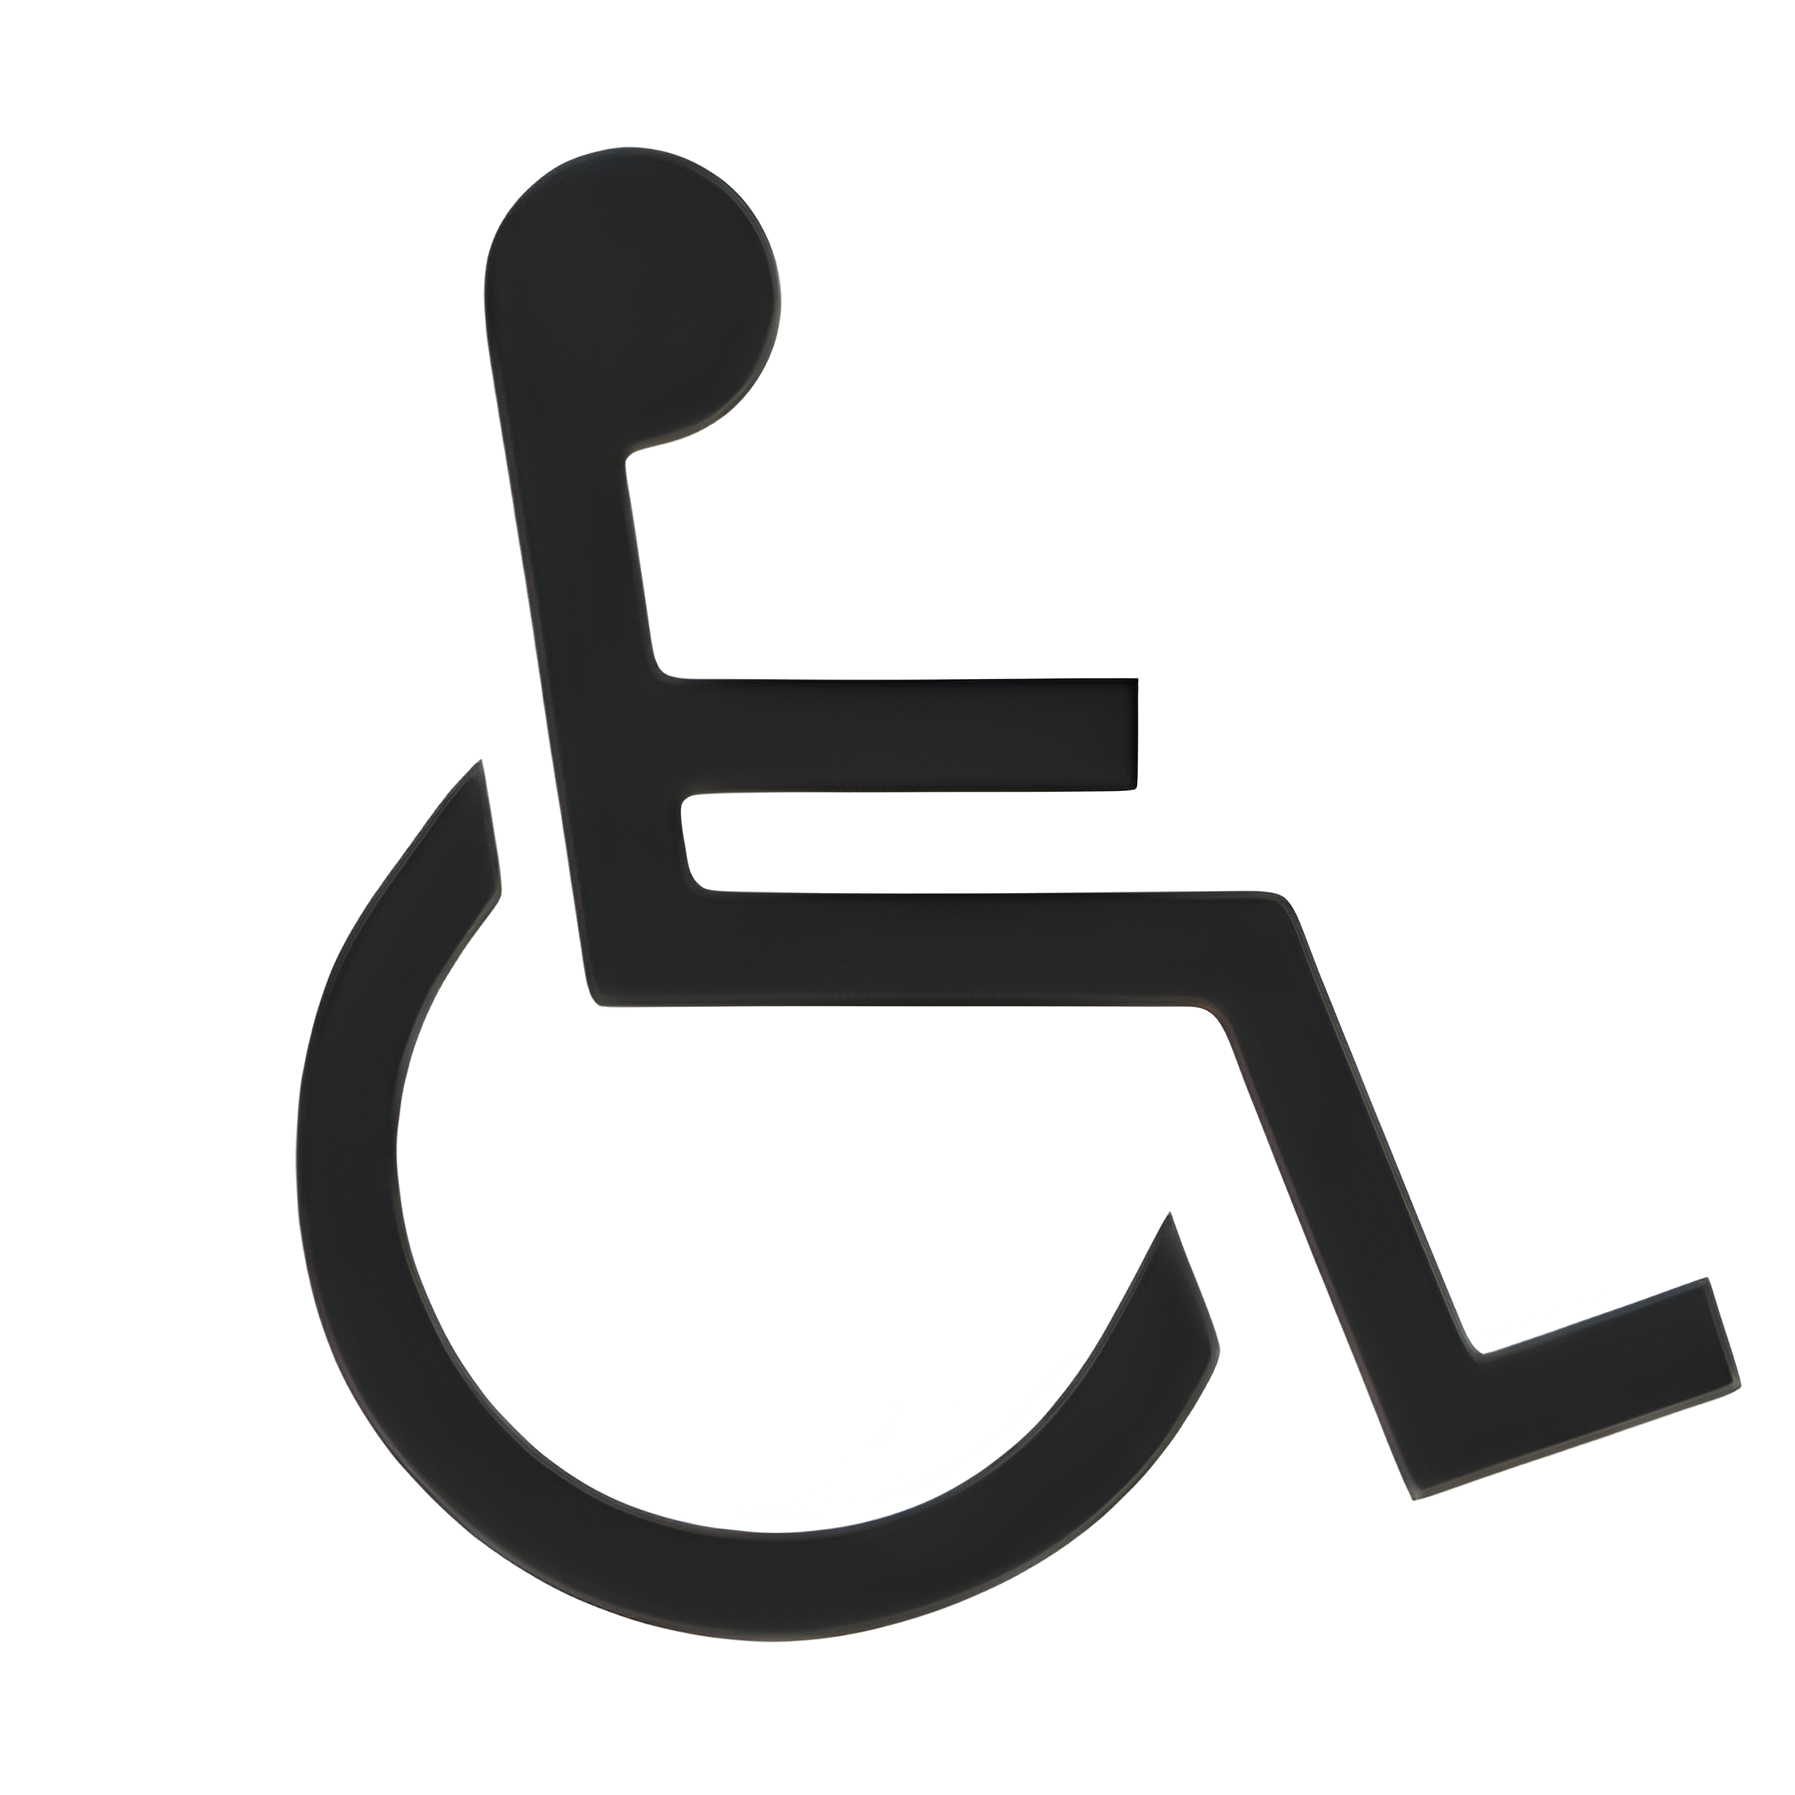 Disabled Parking Stencil